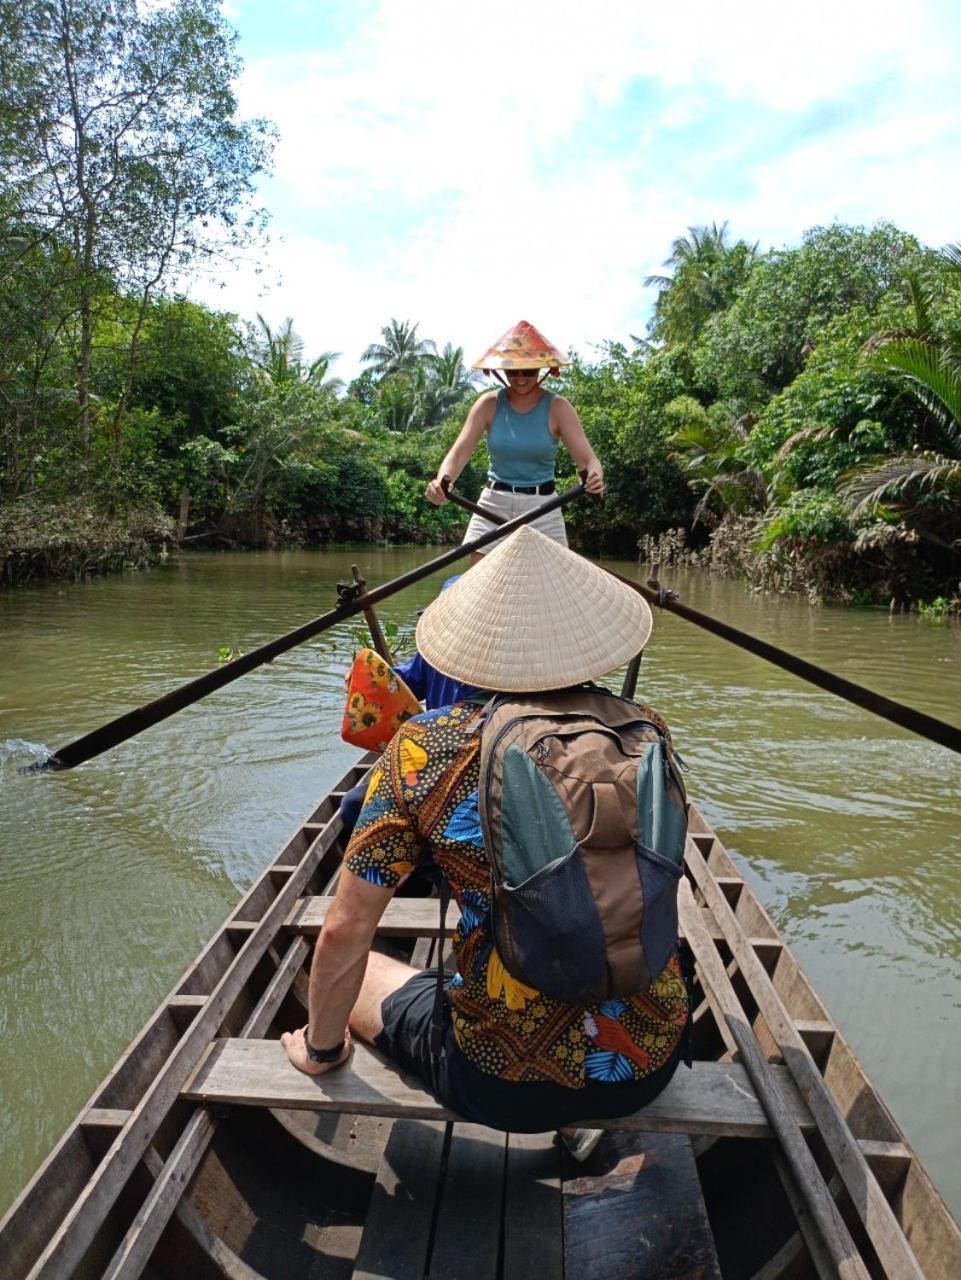 Mekong Pottery Homestay, Green-Friendly & Boat Tour Vĩnh Long Εξωτερικό φωτογραφία